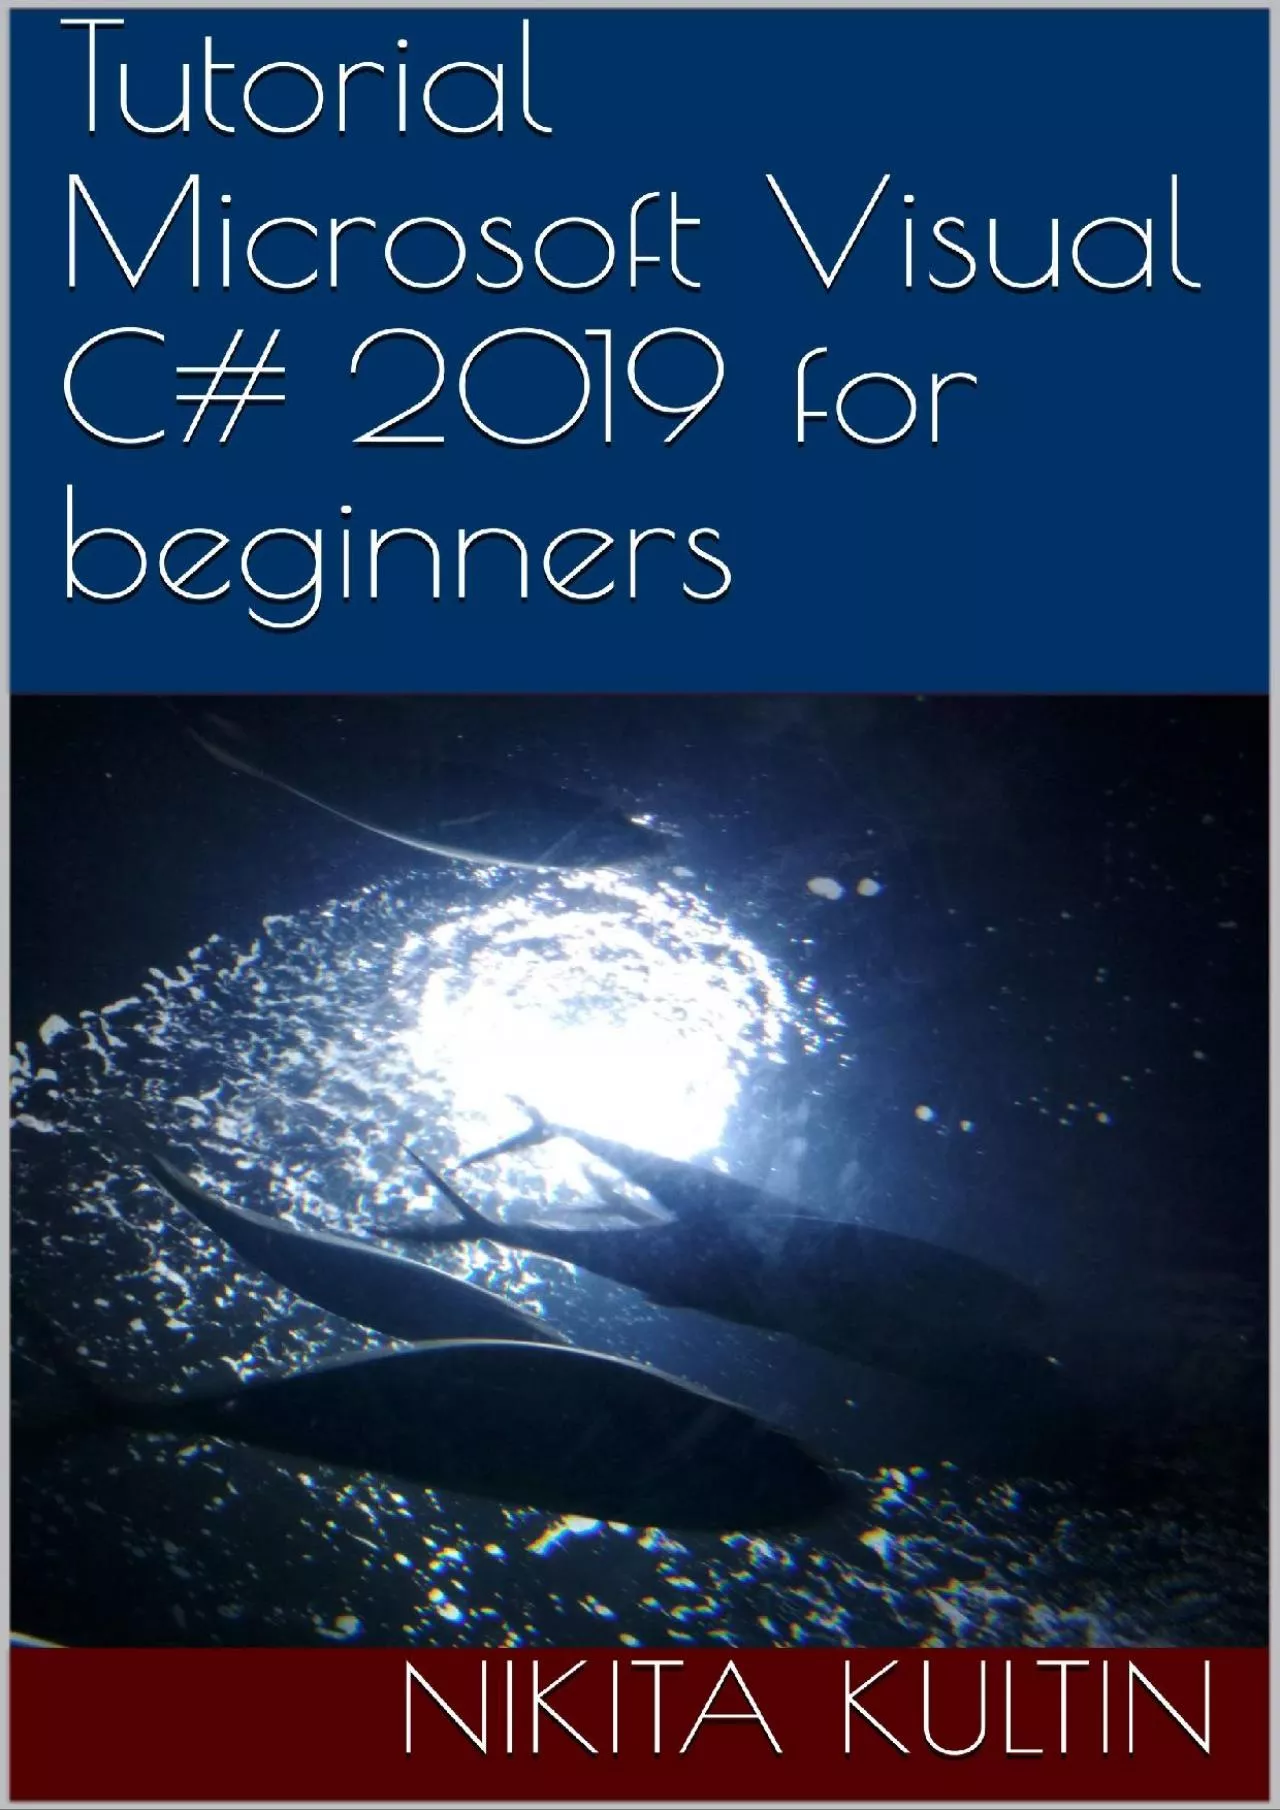 [BEST]-Tutorial Microsoft Visual C 2019 for beginners (Programming Tutorials for Beginners)